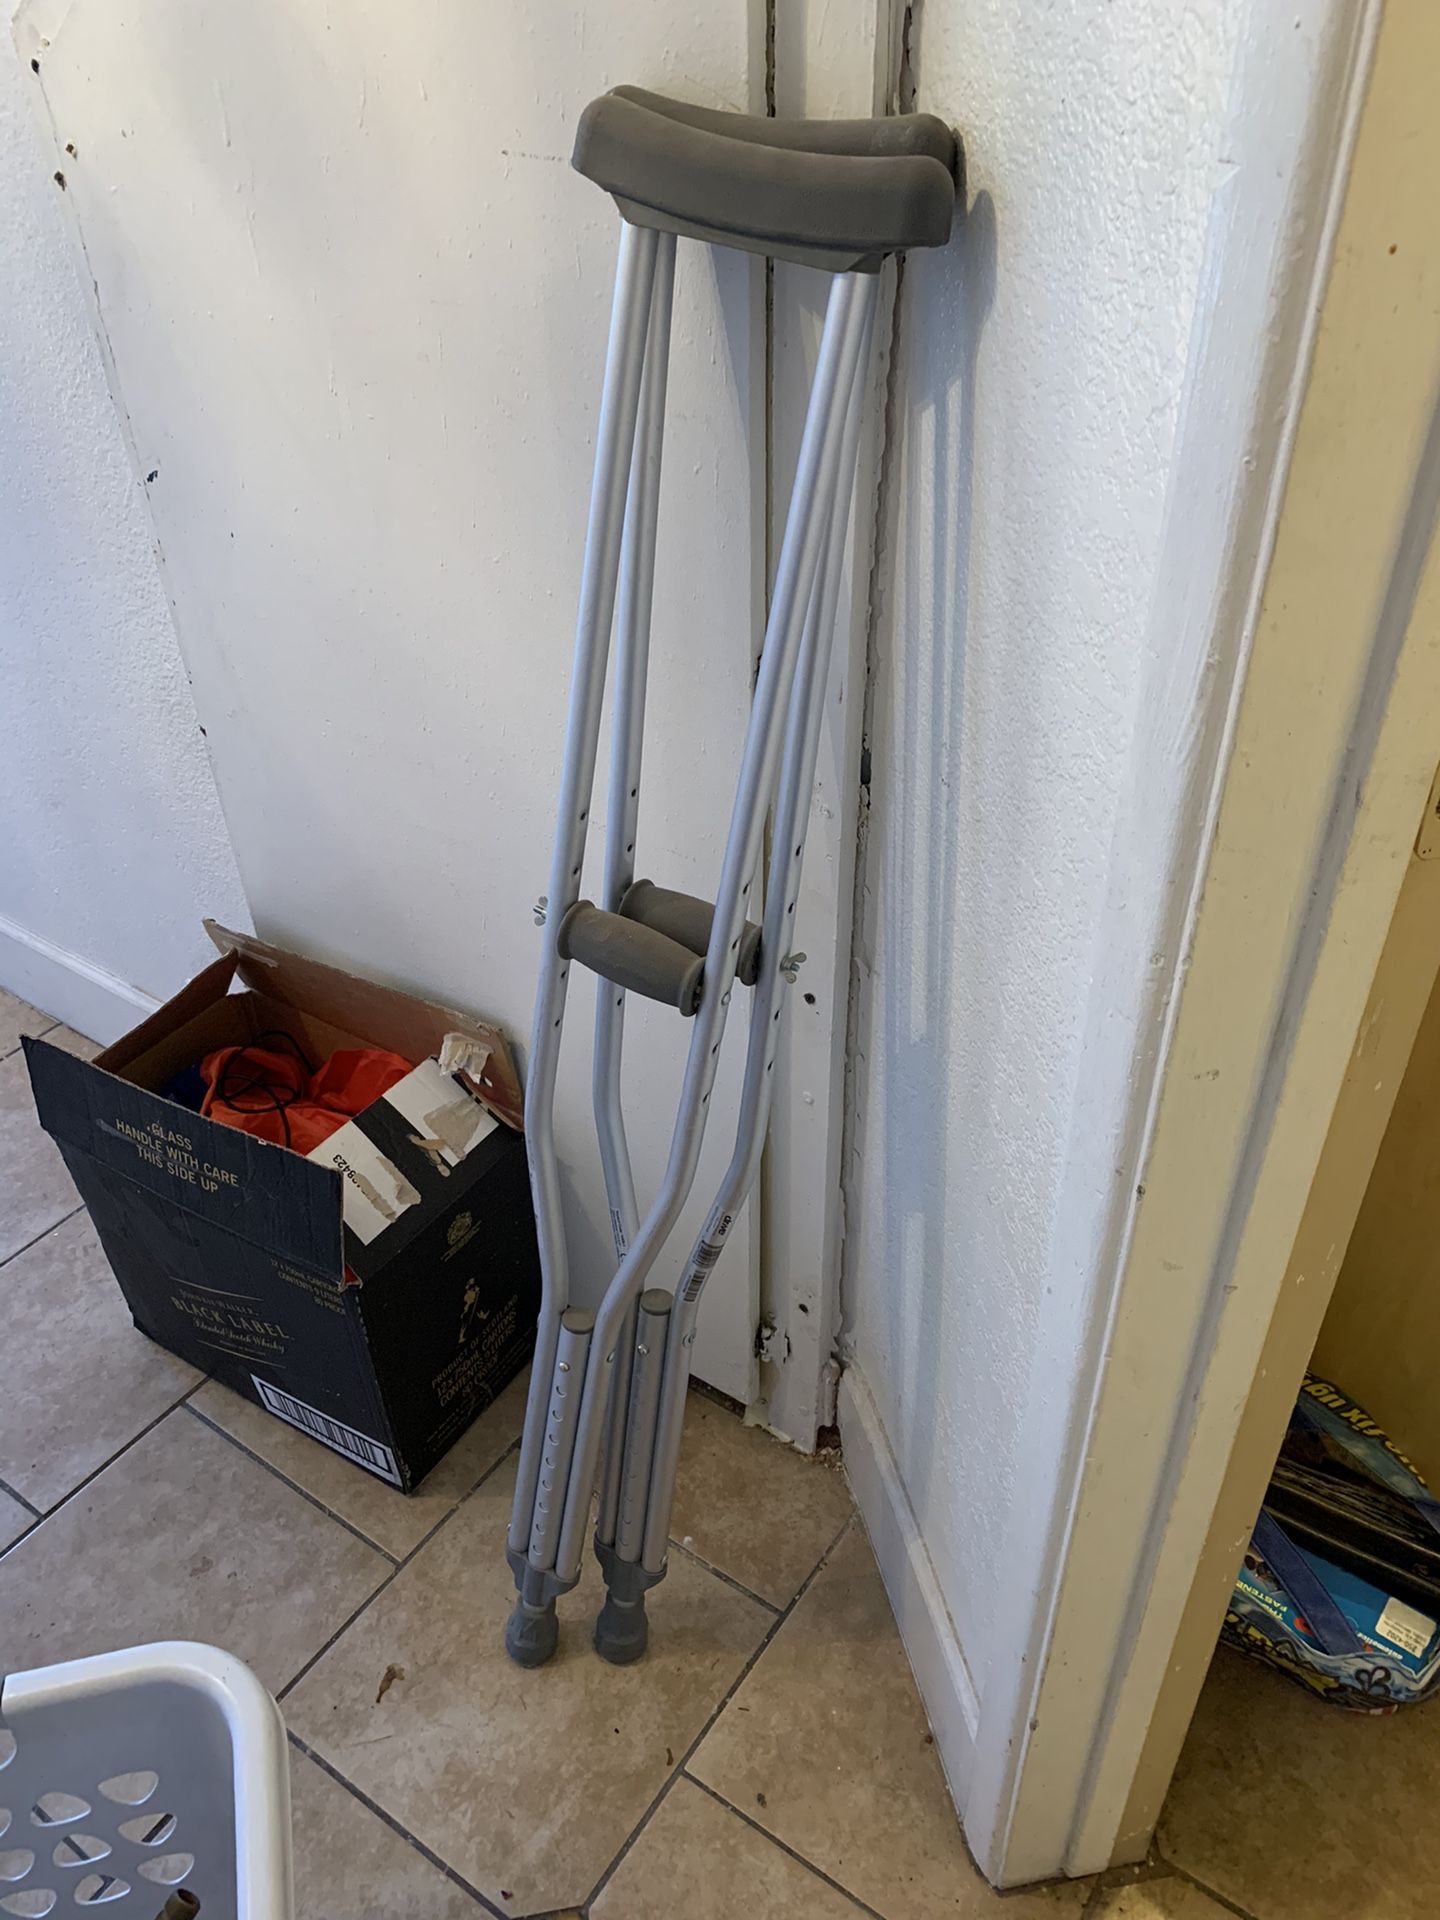 Free crutches